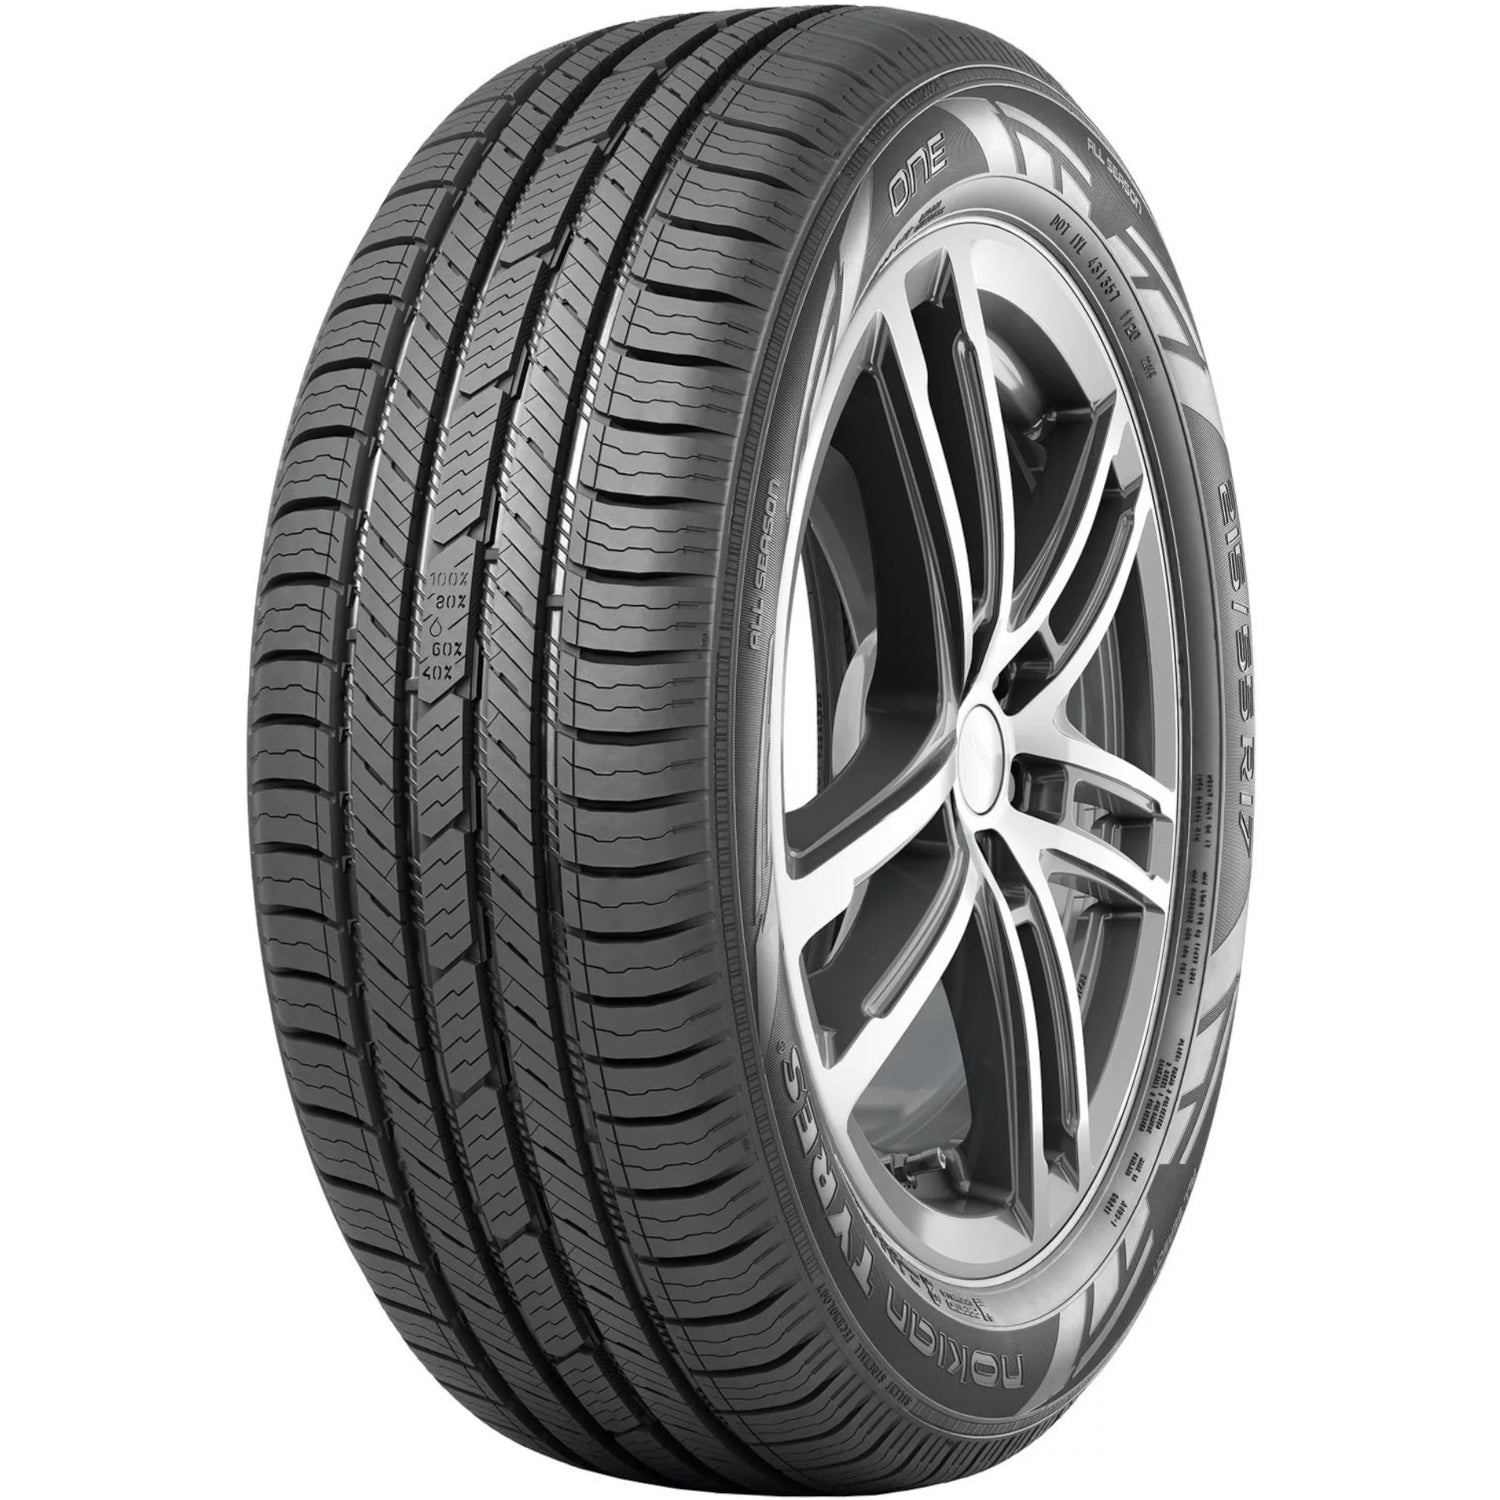 NOKIAN ONE 215/55R17 (26.3X8.5R 17) Tires